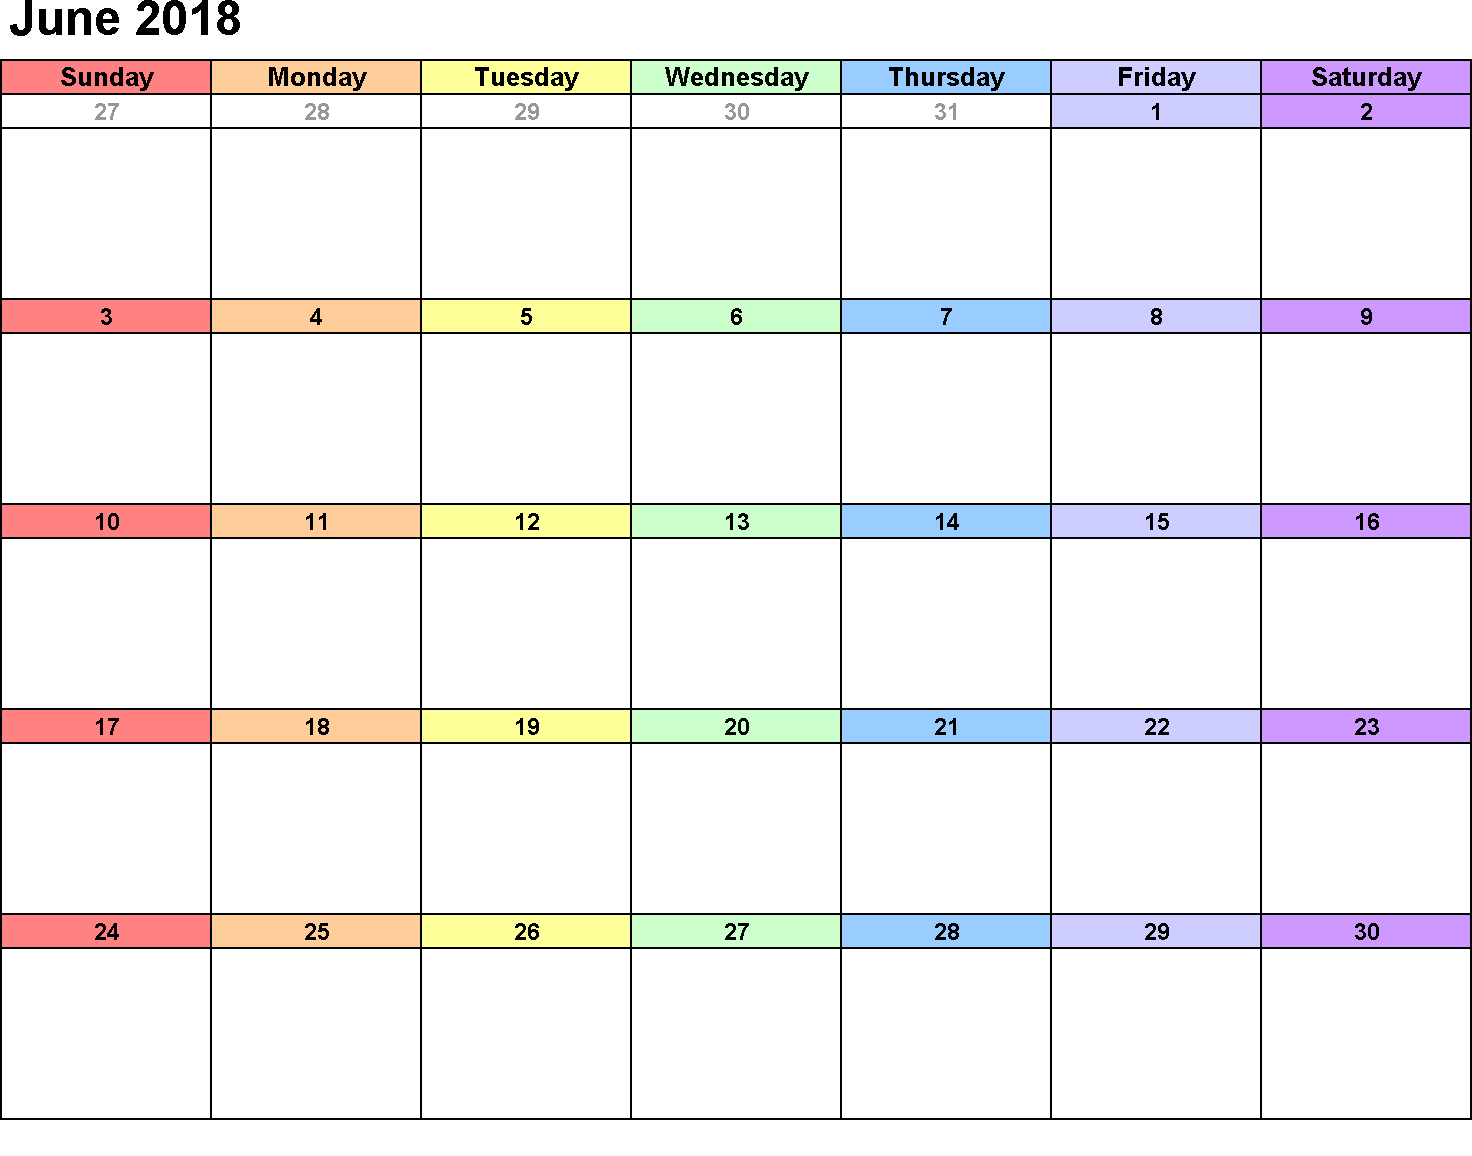 June 2018 Calendar Template 